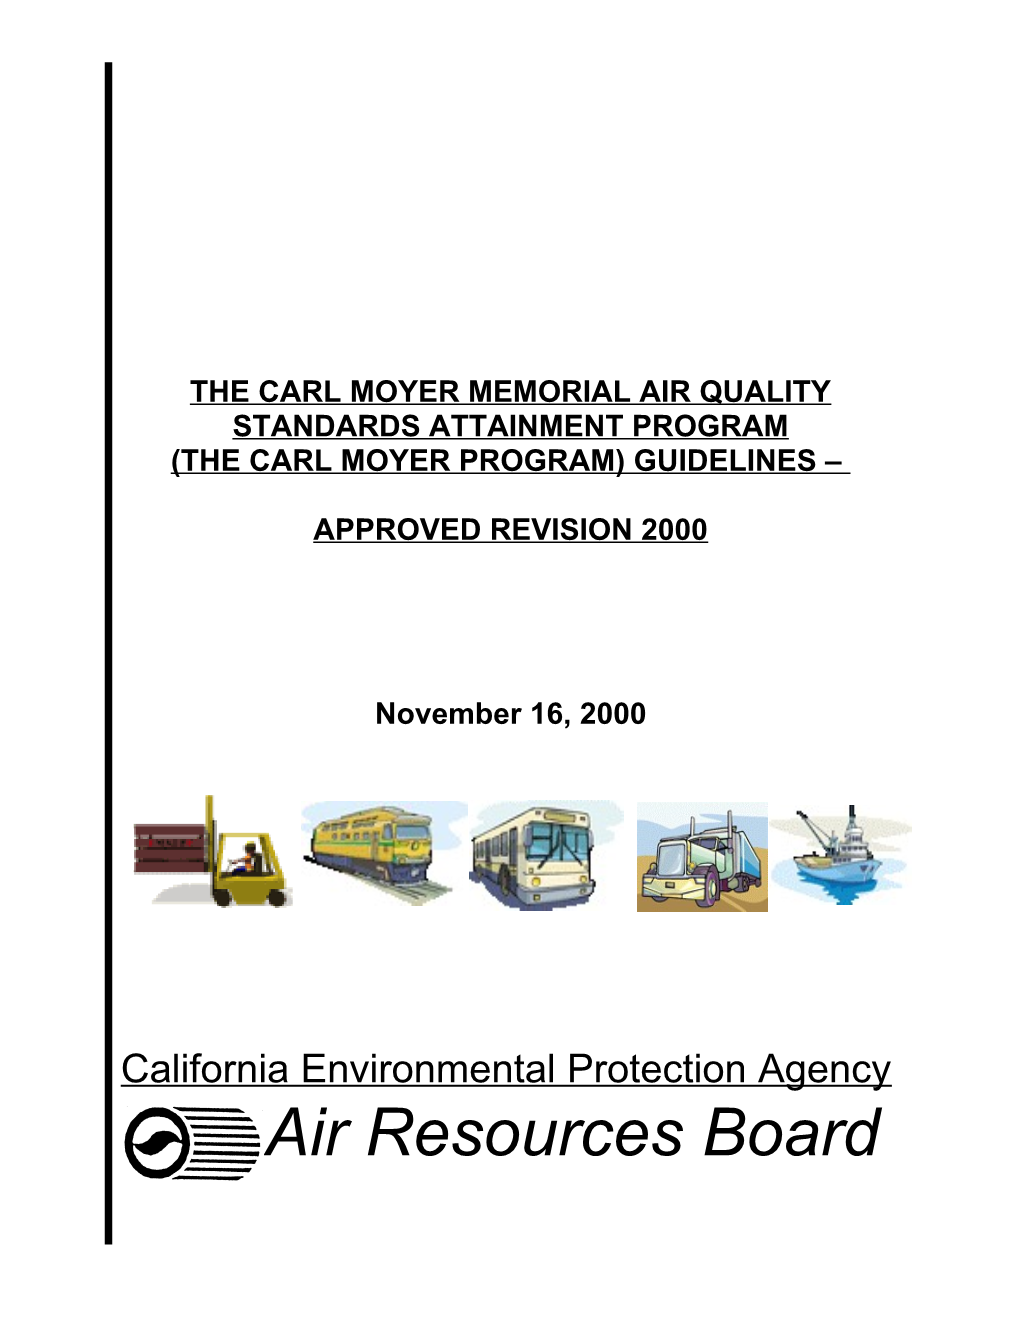 The Carl Moyer Memorial Air Quality Standards Attainment Program